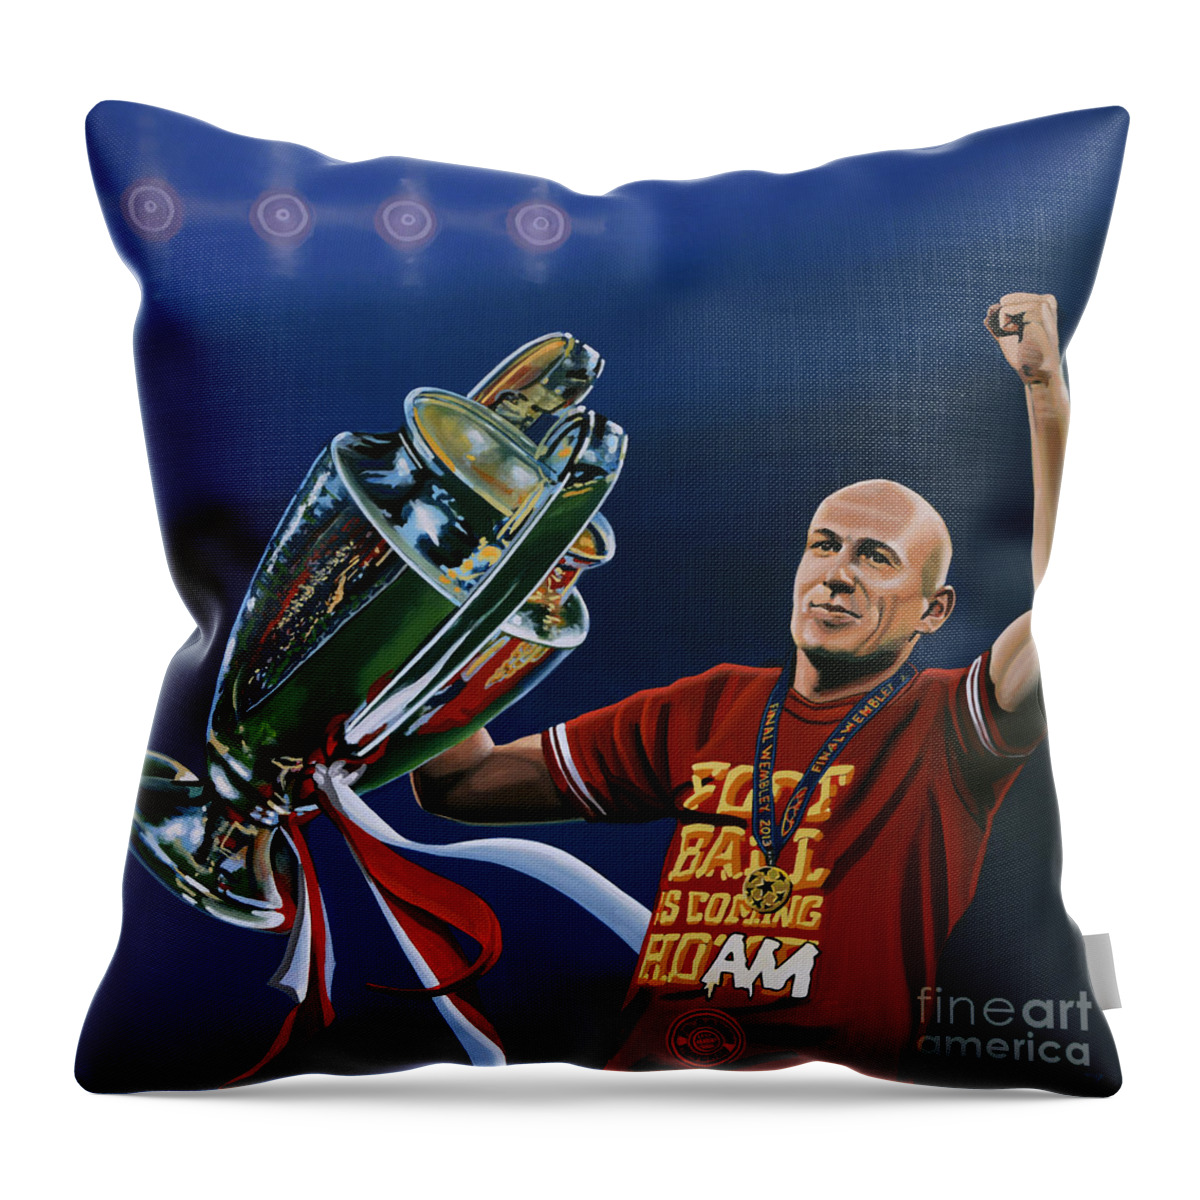 Arjen Robben Throw Pillow featuring the painting Arjen Robben by Paul Meijering